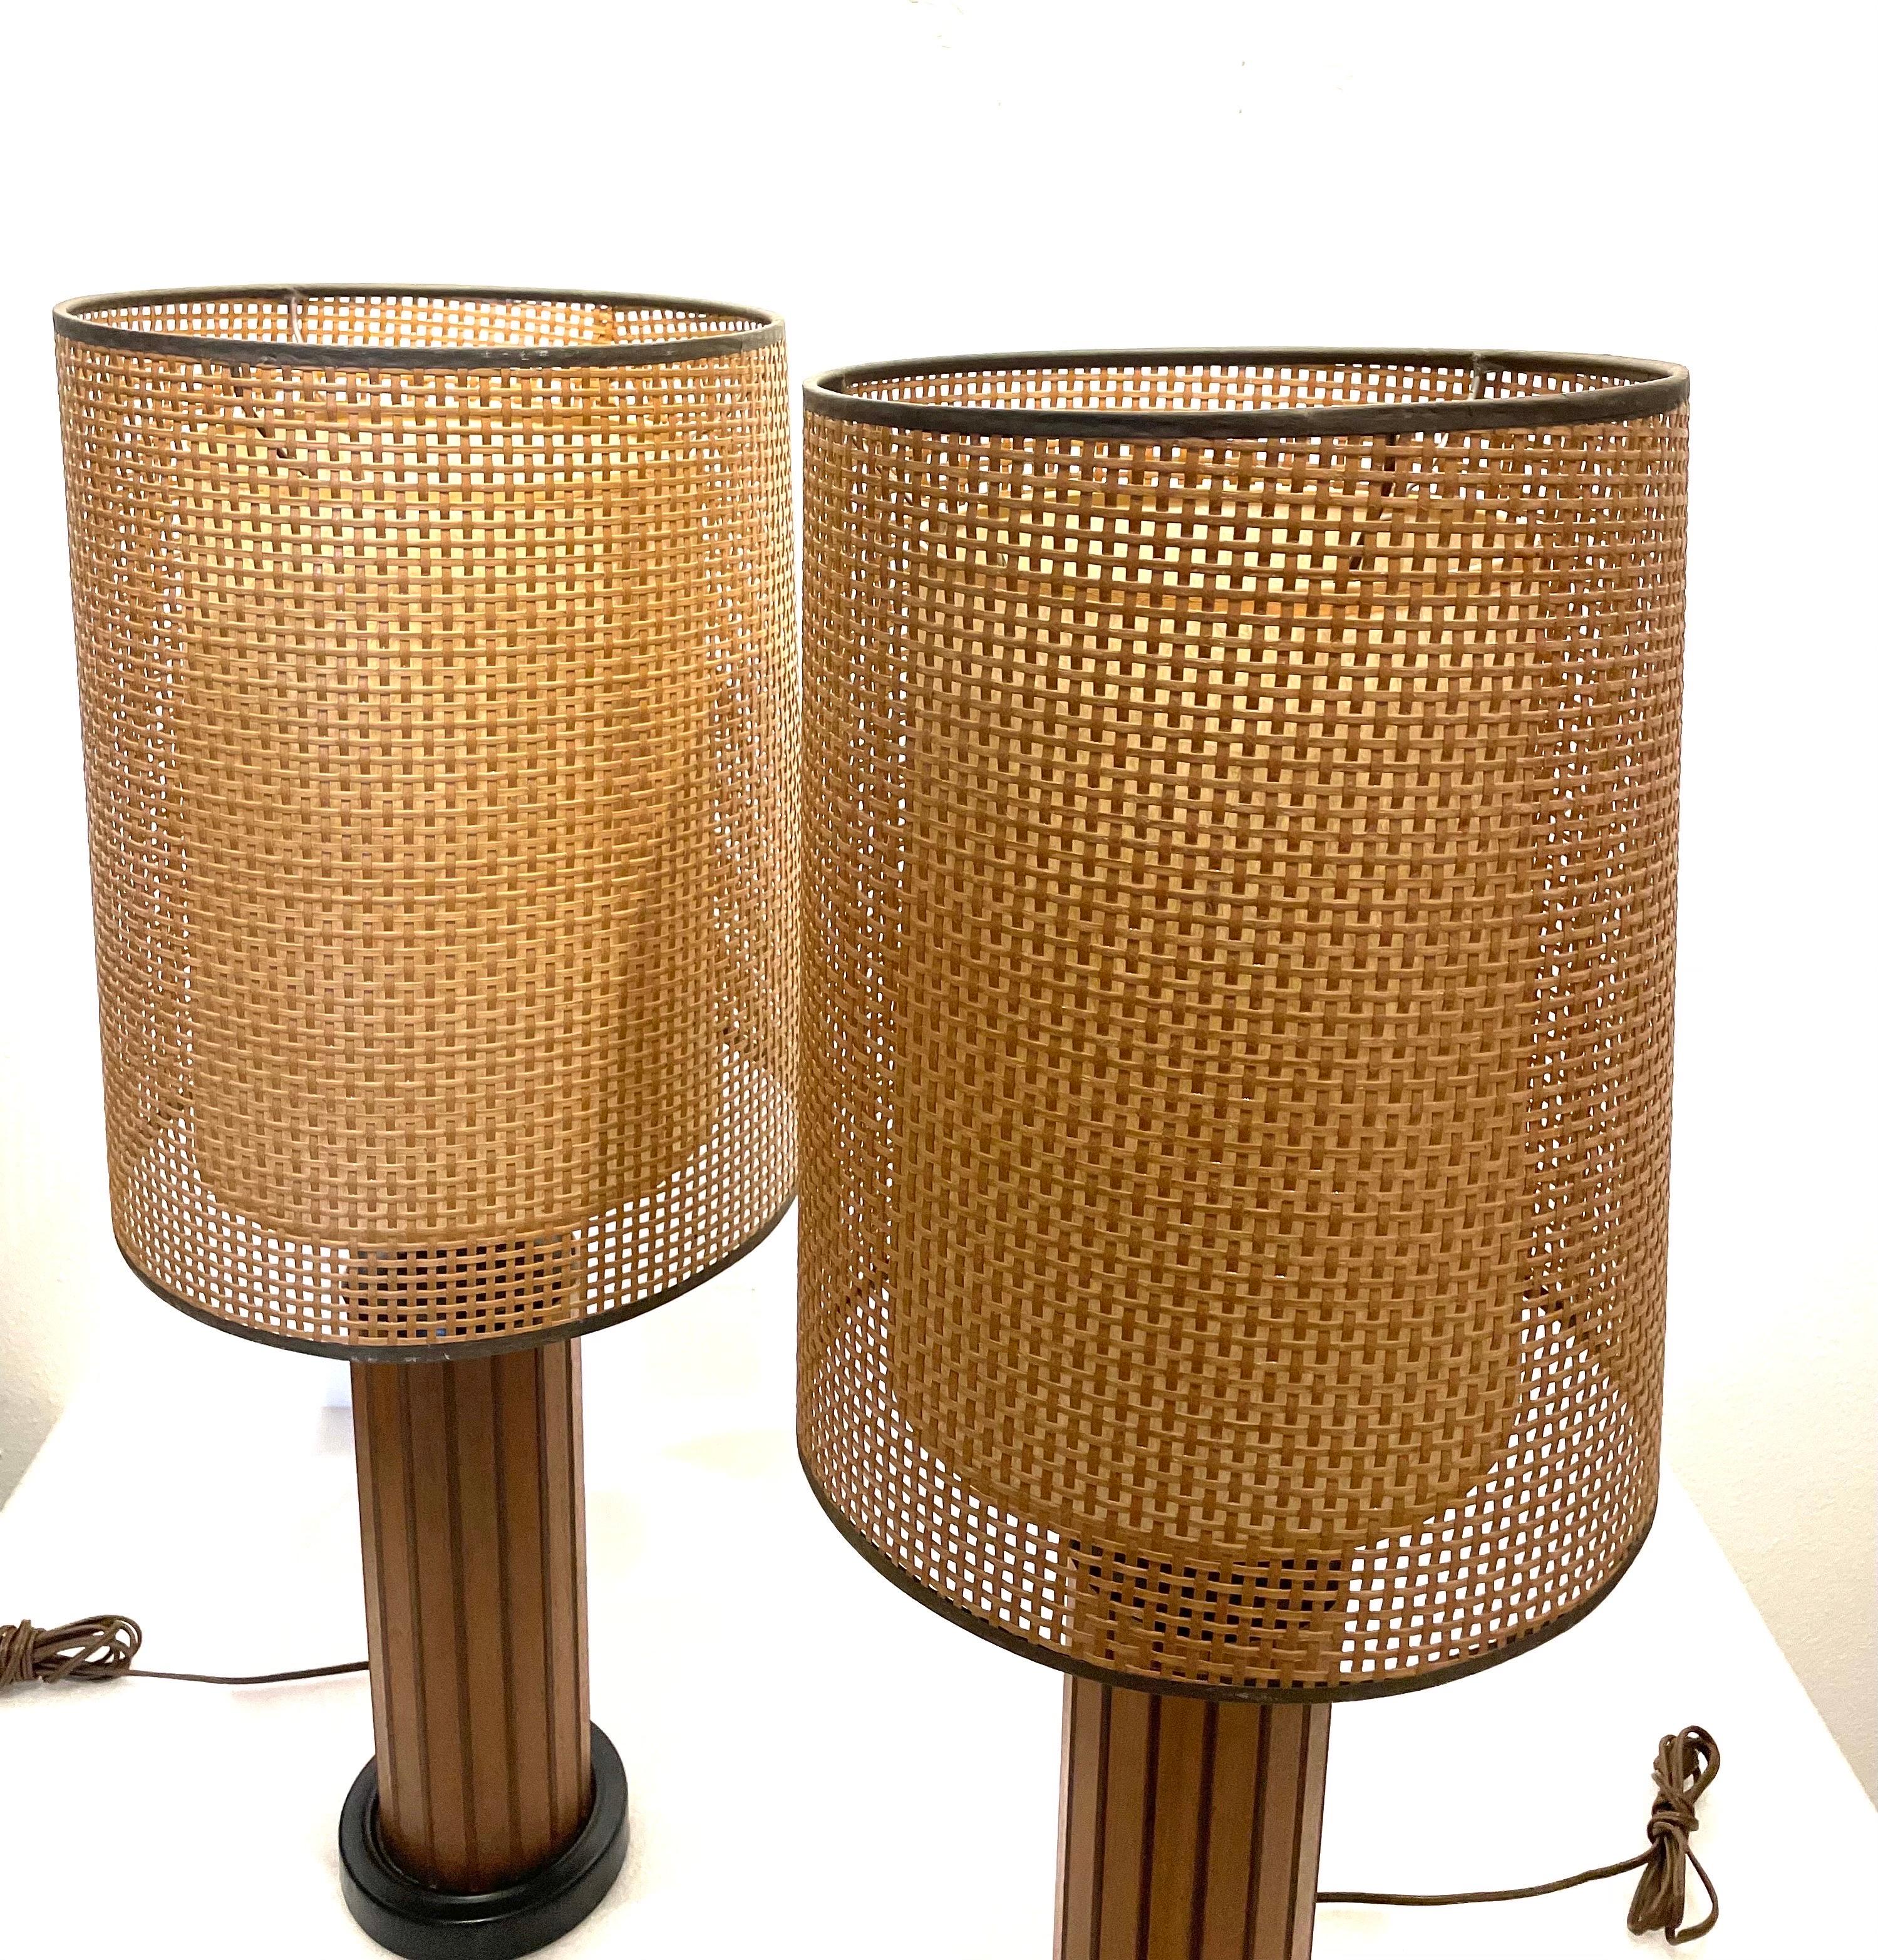 20th Century Pair of American Mid-Century Modern Table Lamps in Teak Base Original Lampshades